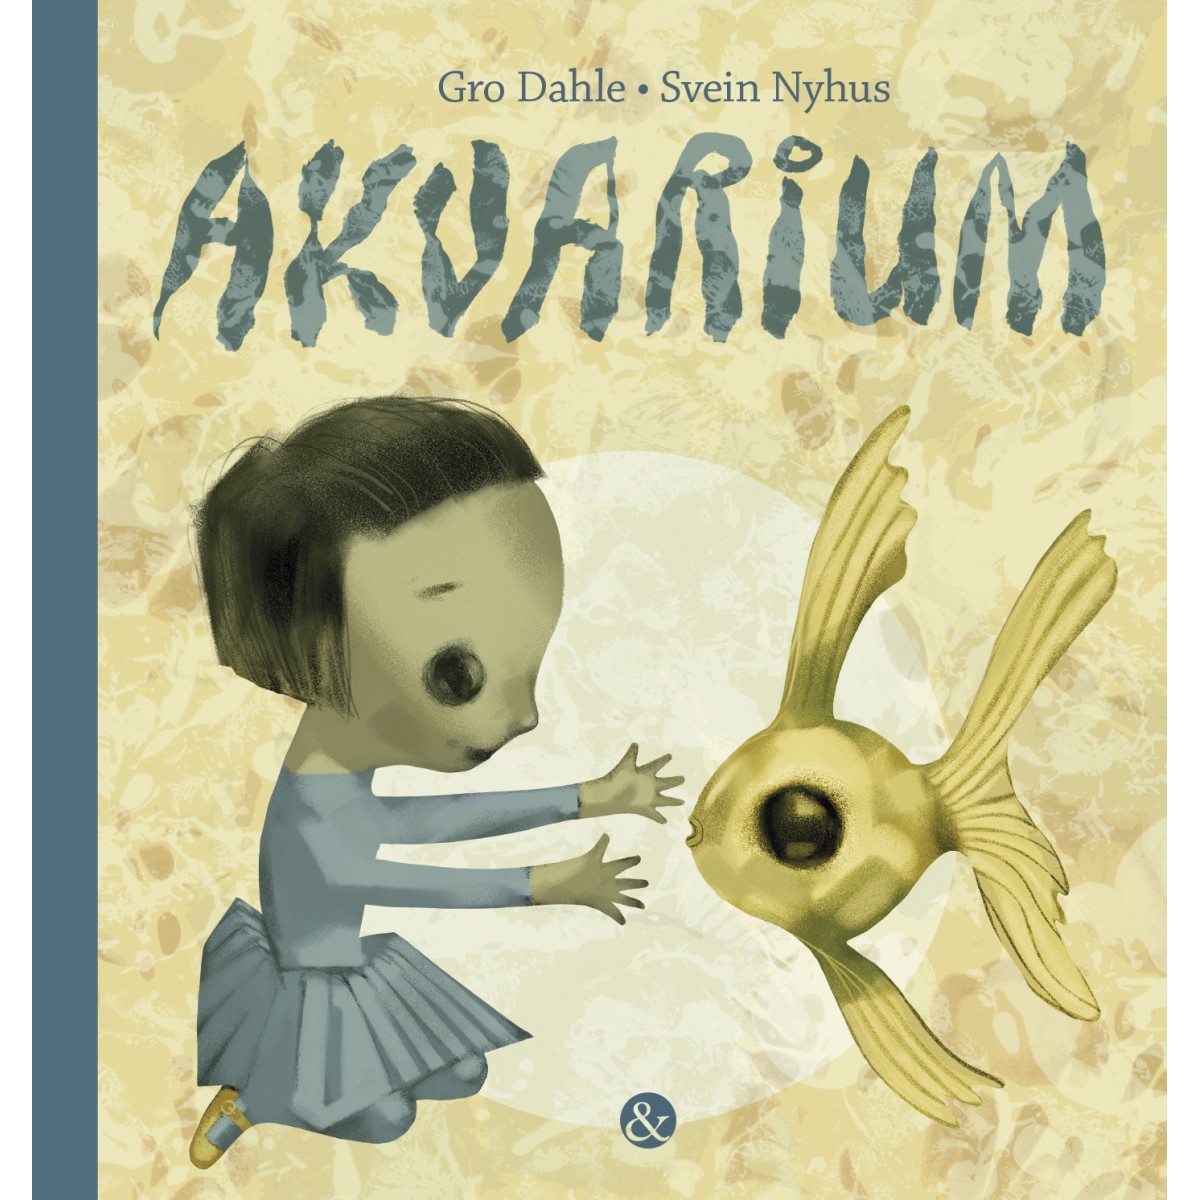 Gro Dahle og Svein Nyhus: Akvarium